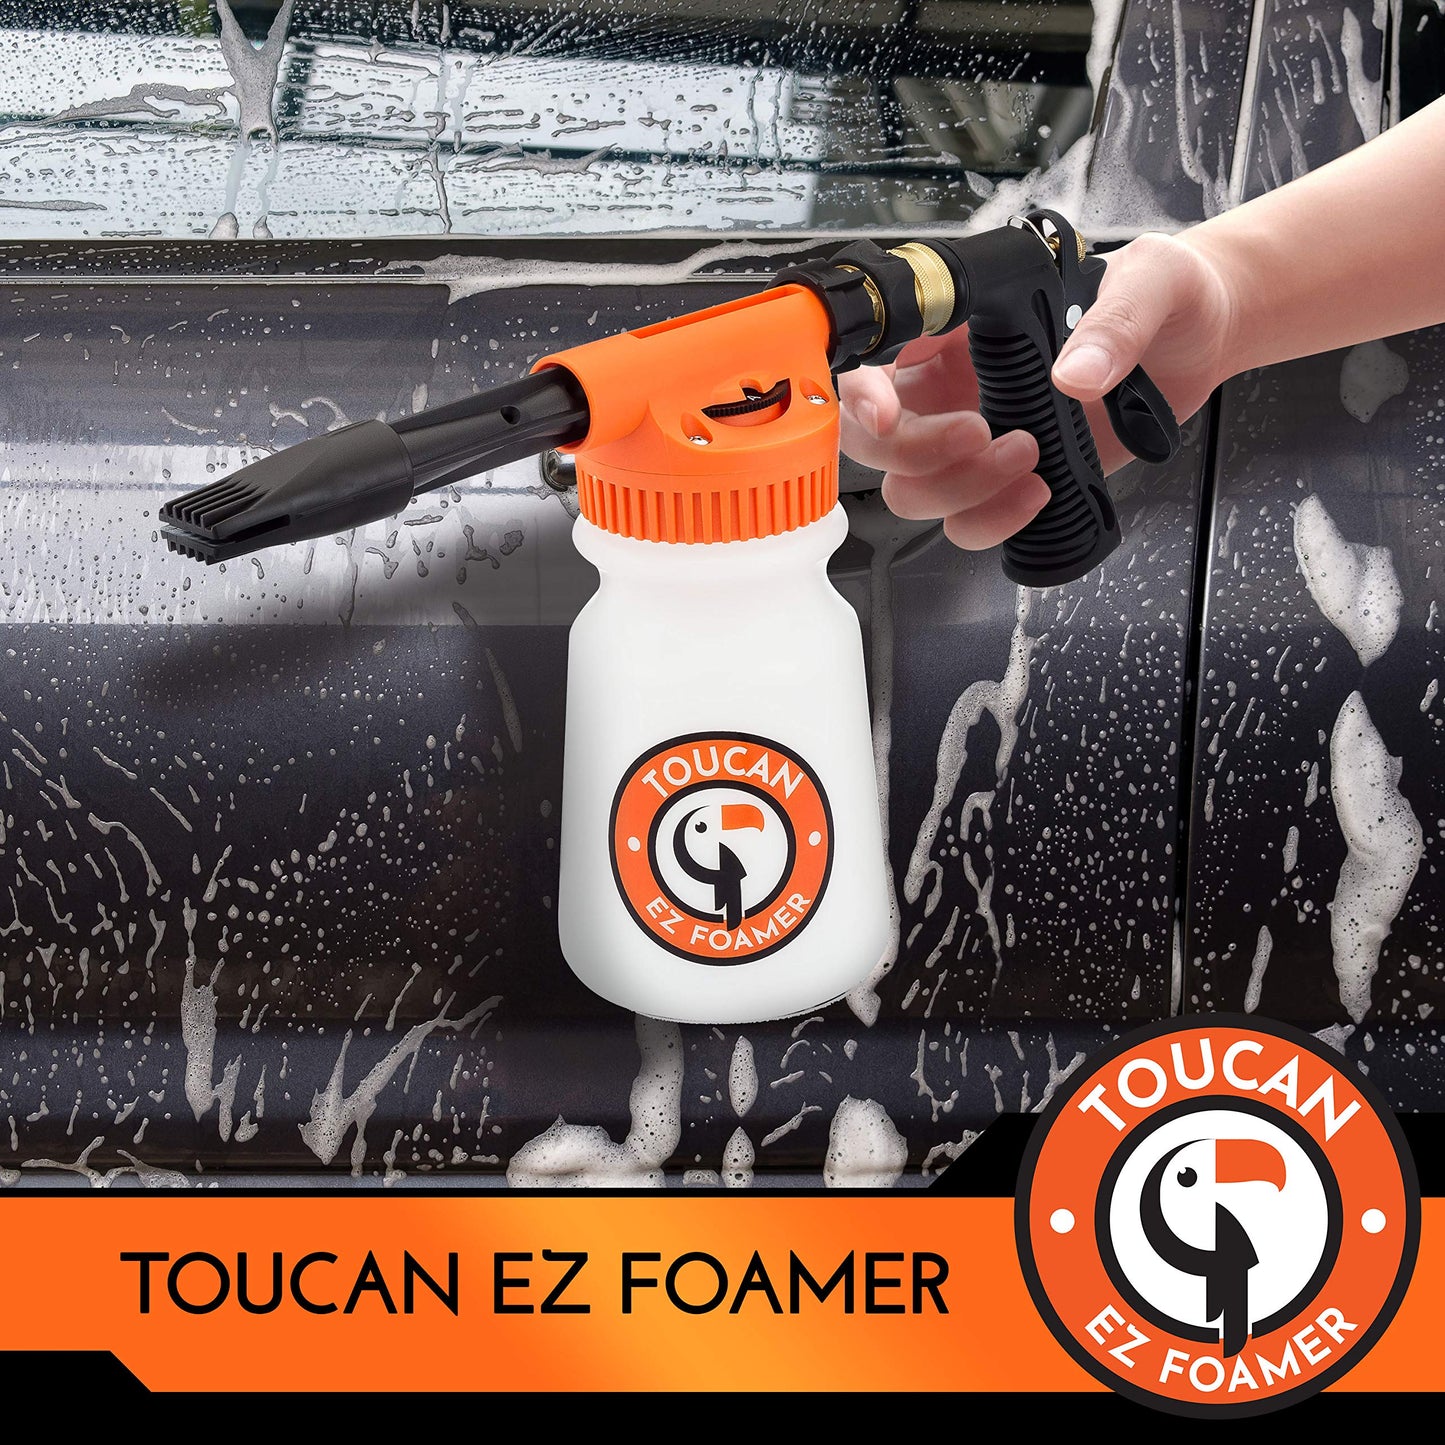 TOUCAN AUTO EZ FOAMER Car Wash Kit! Spray Foam Cannon Pressure Washer Accessories for Garden Hose. Adjustable Mix Head, Car Foam Gun, Brass Hose Quick Connect, Crack-Proof Soap Bottle and Attachments